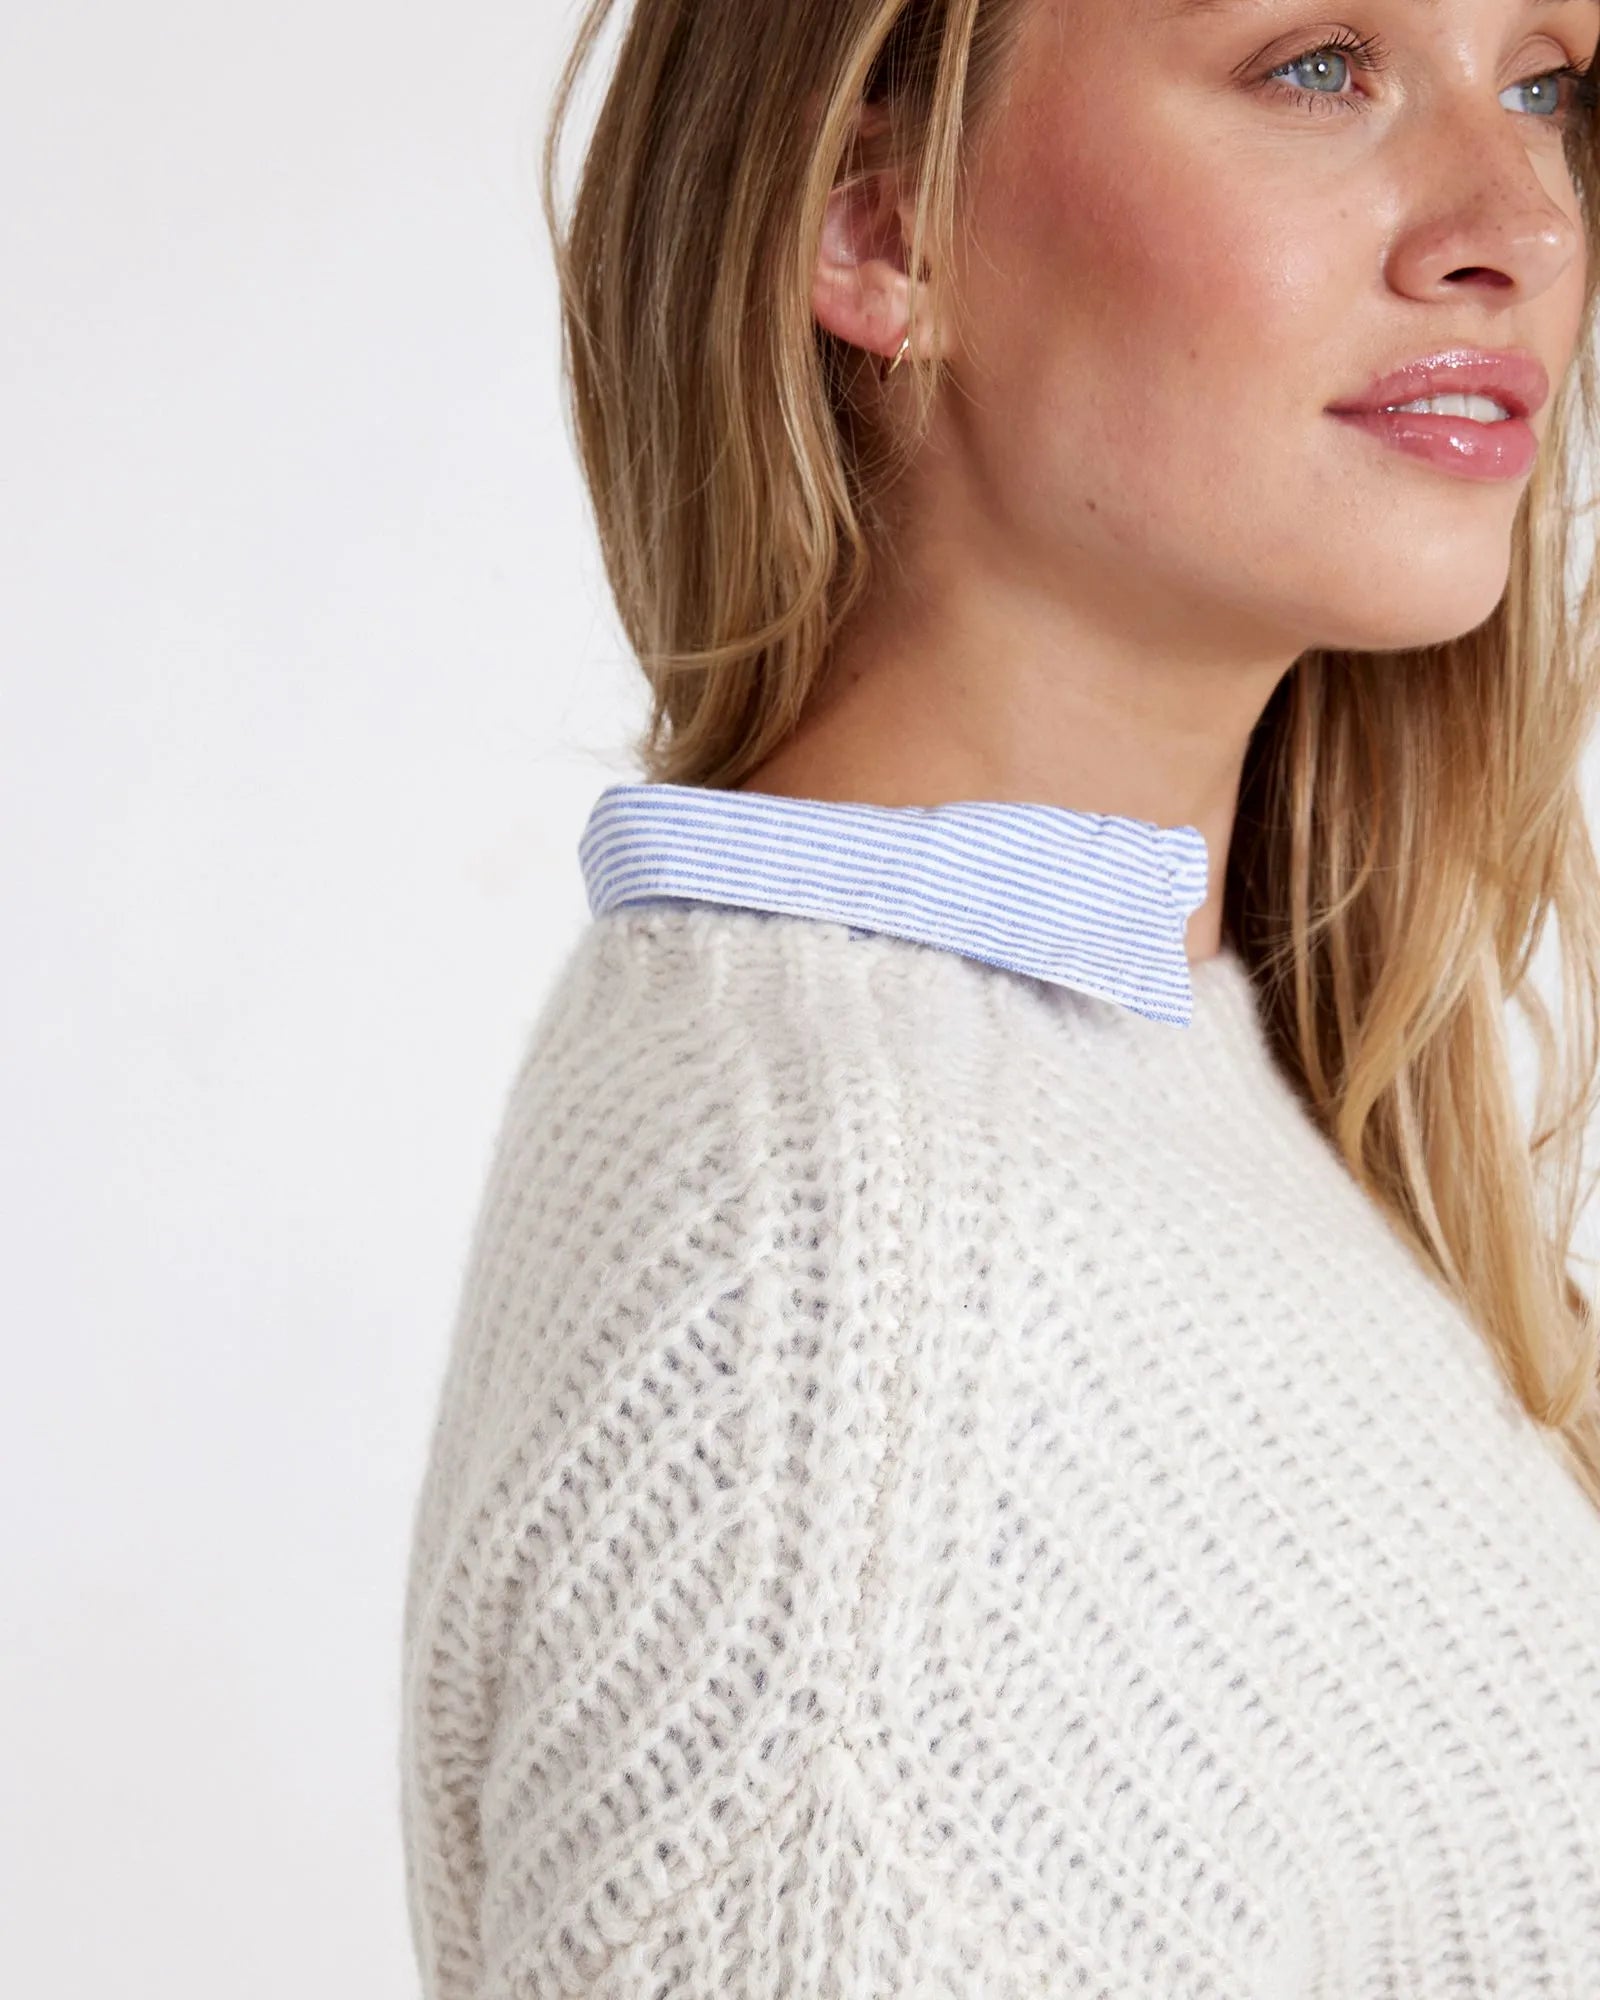 Cajsa Super Soft Knitted Sweater - Sandshell